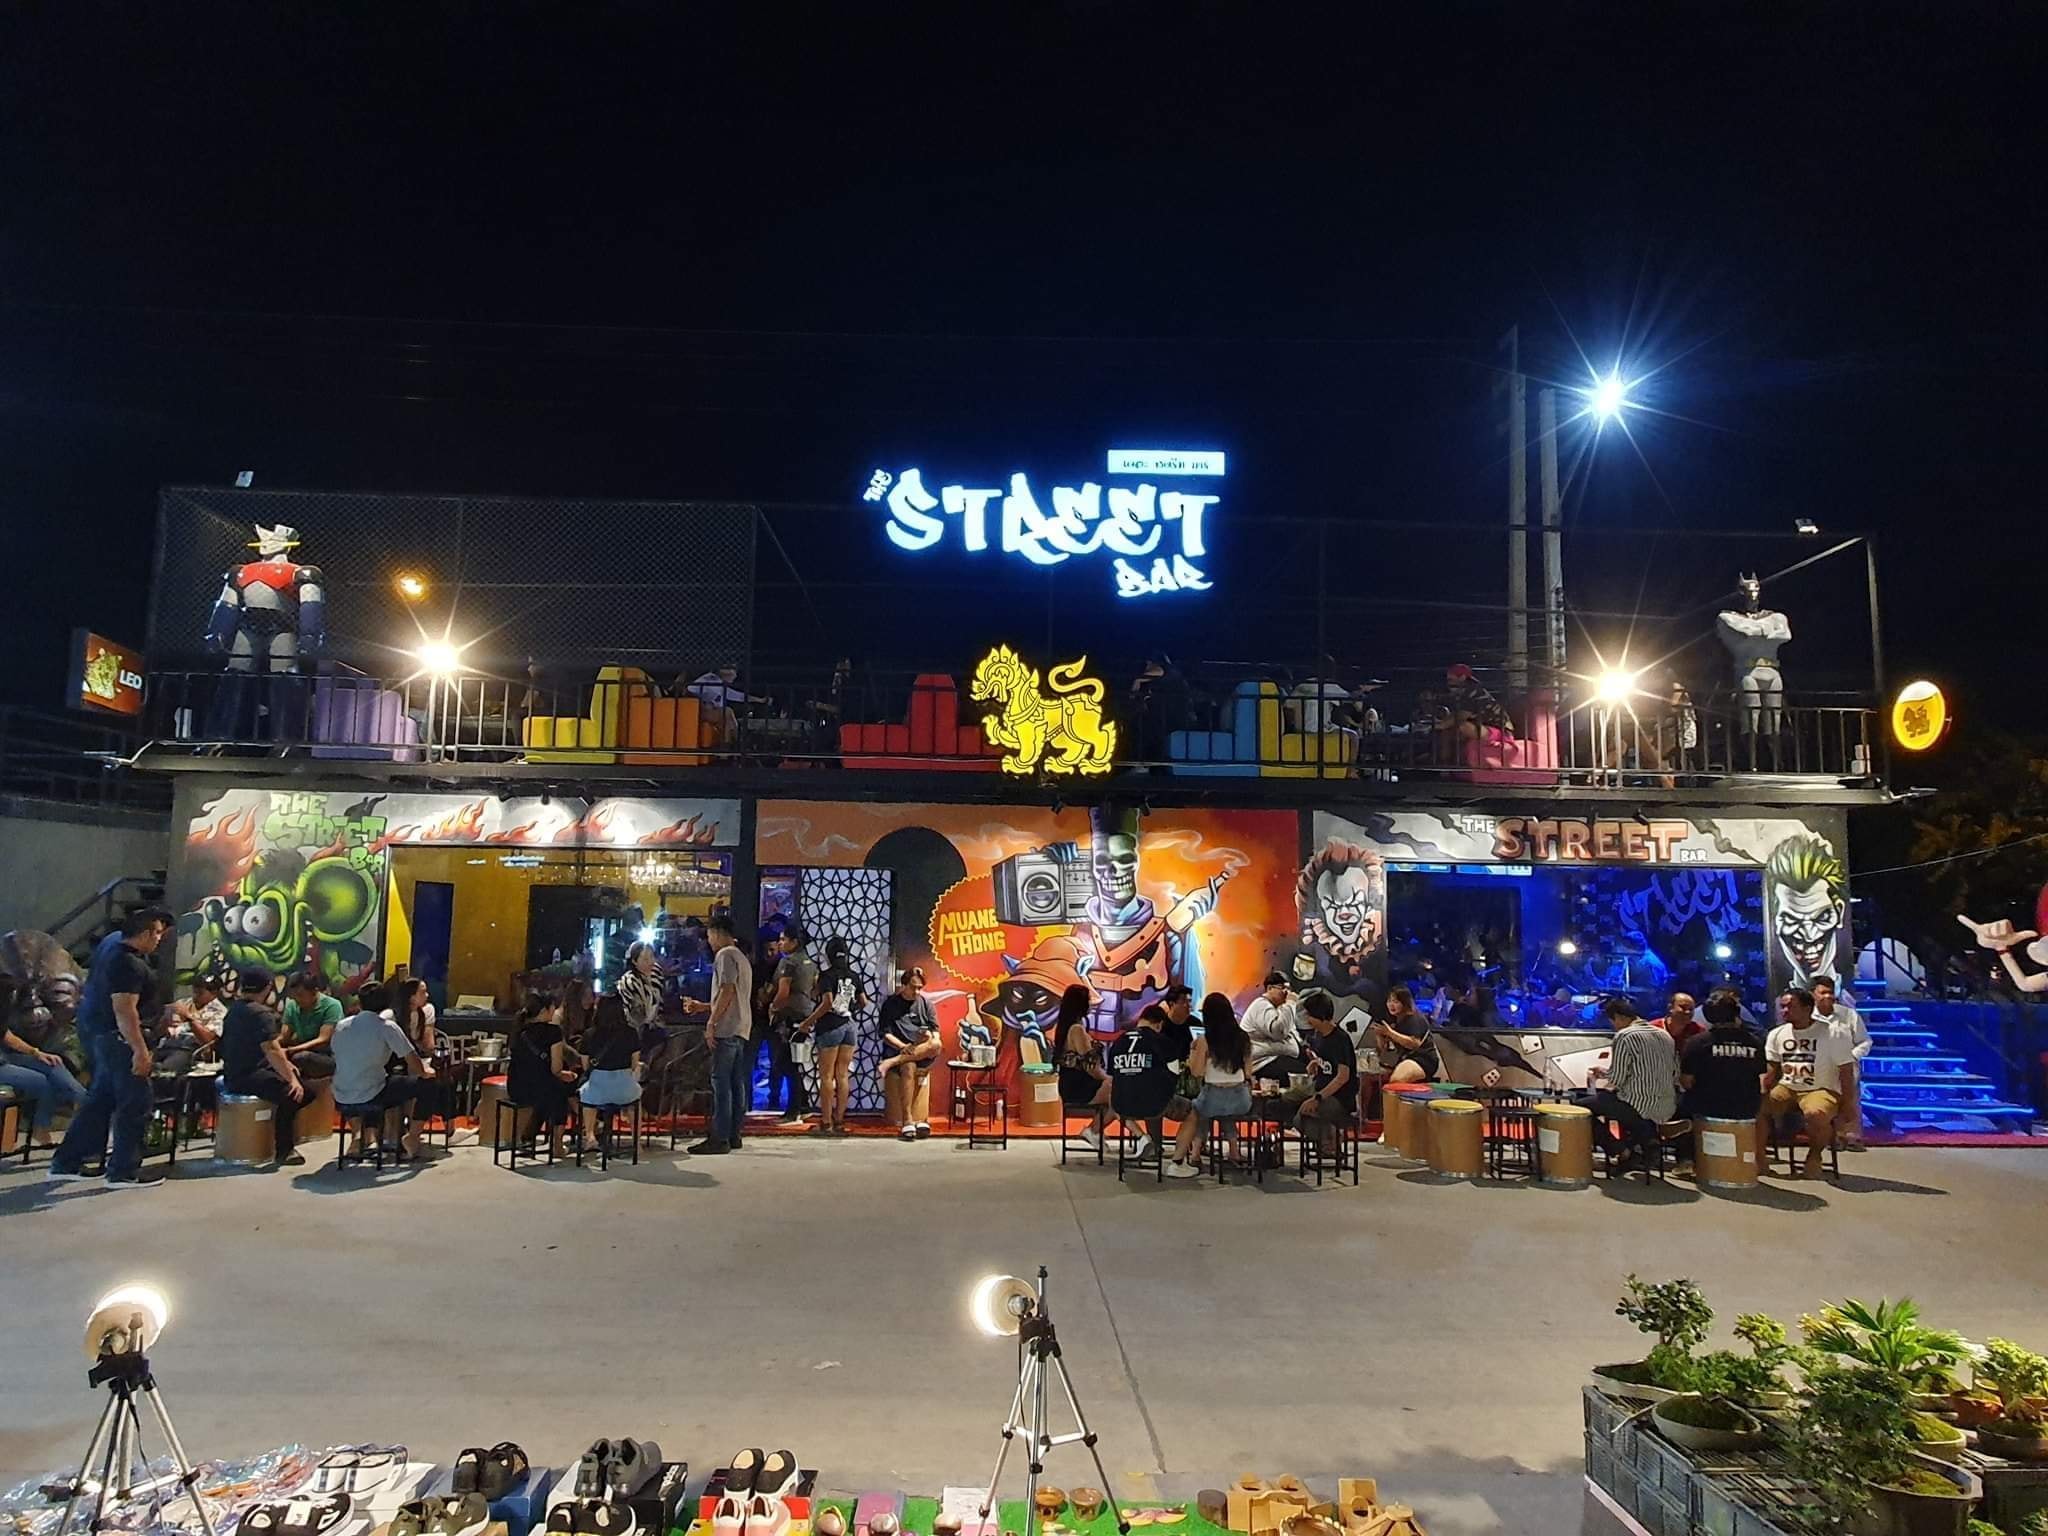 The Street Bar บาร์ของคนรักสตรีท เมืองทองธานี (The Street Bar บาร์ของคนรักสตรีท เมืองทองธานี) : นนทบุรี (Nonthaburi)